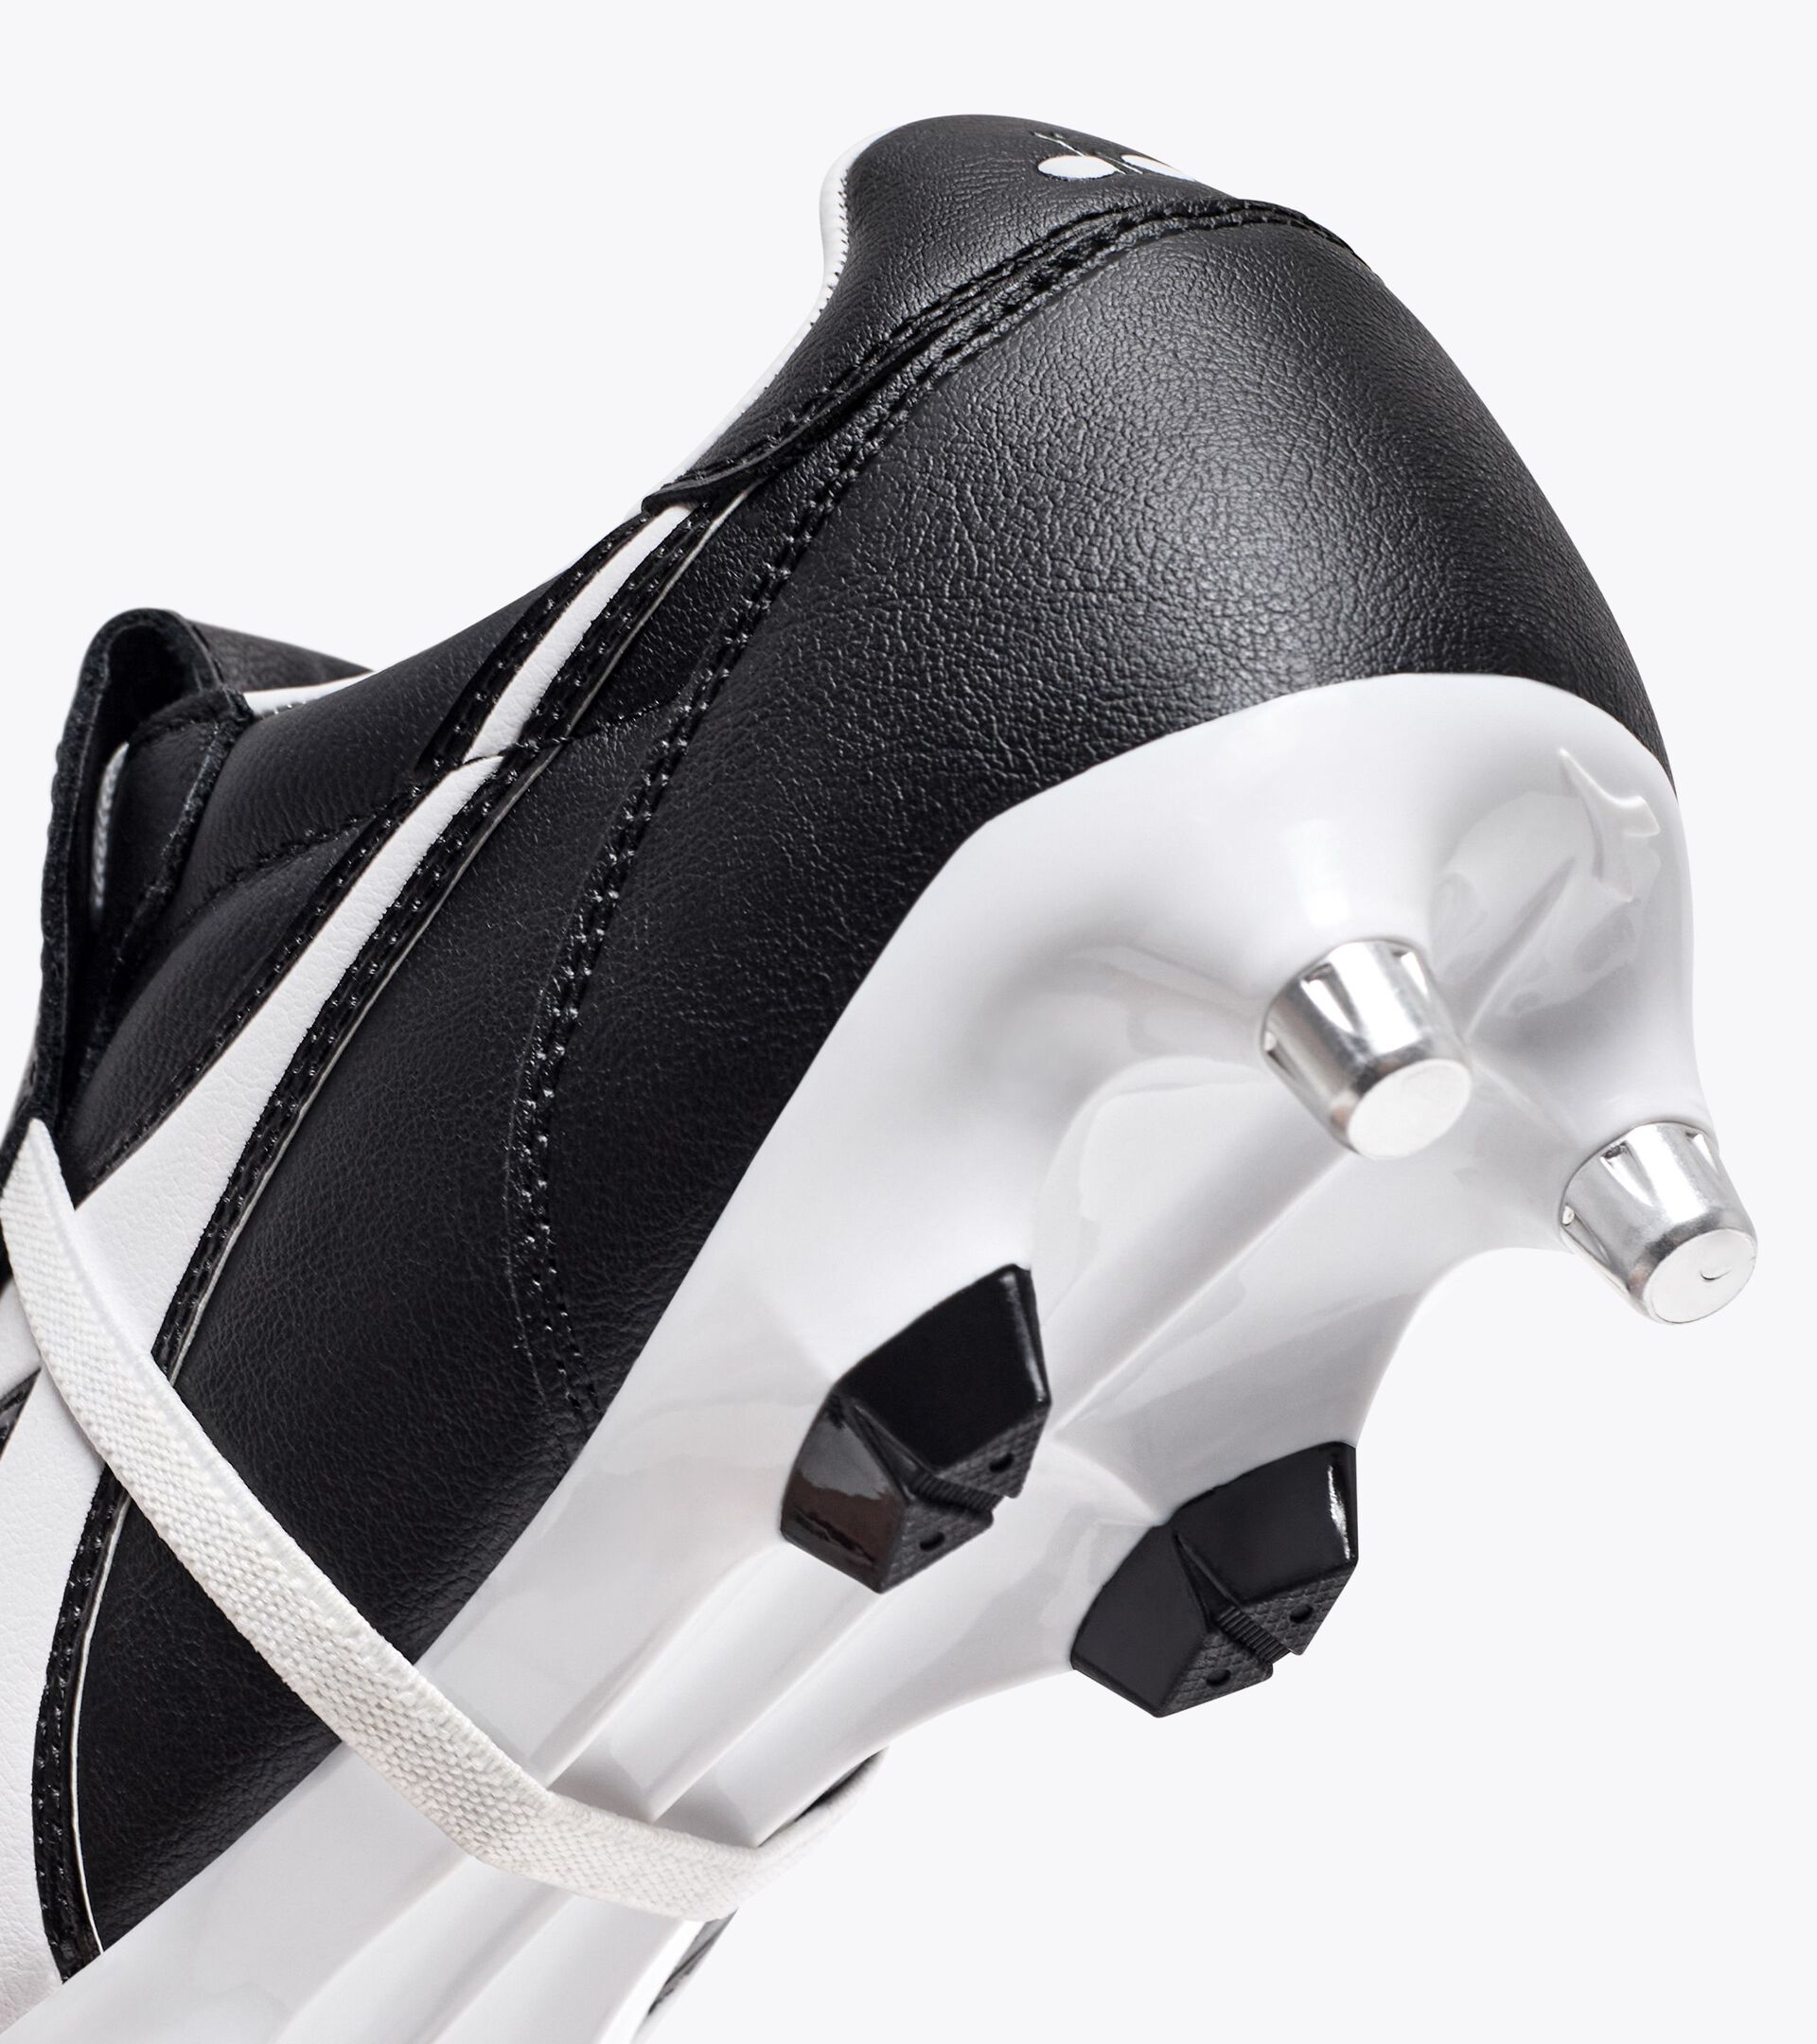 Calcio boots for soft and wet grounds BRASIL OG LT T MPH BLACK /WHITE - Diadora